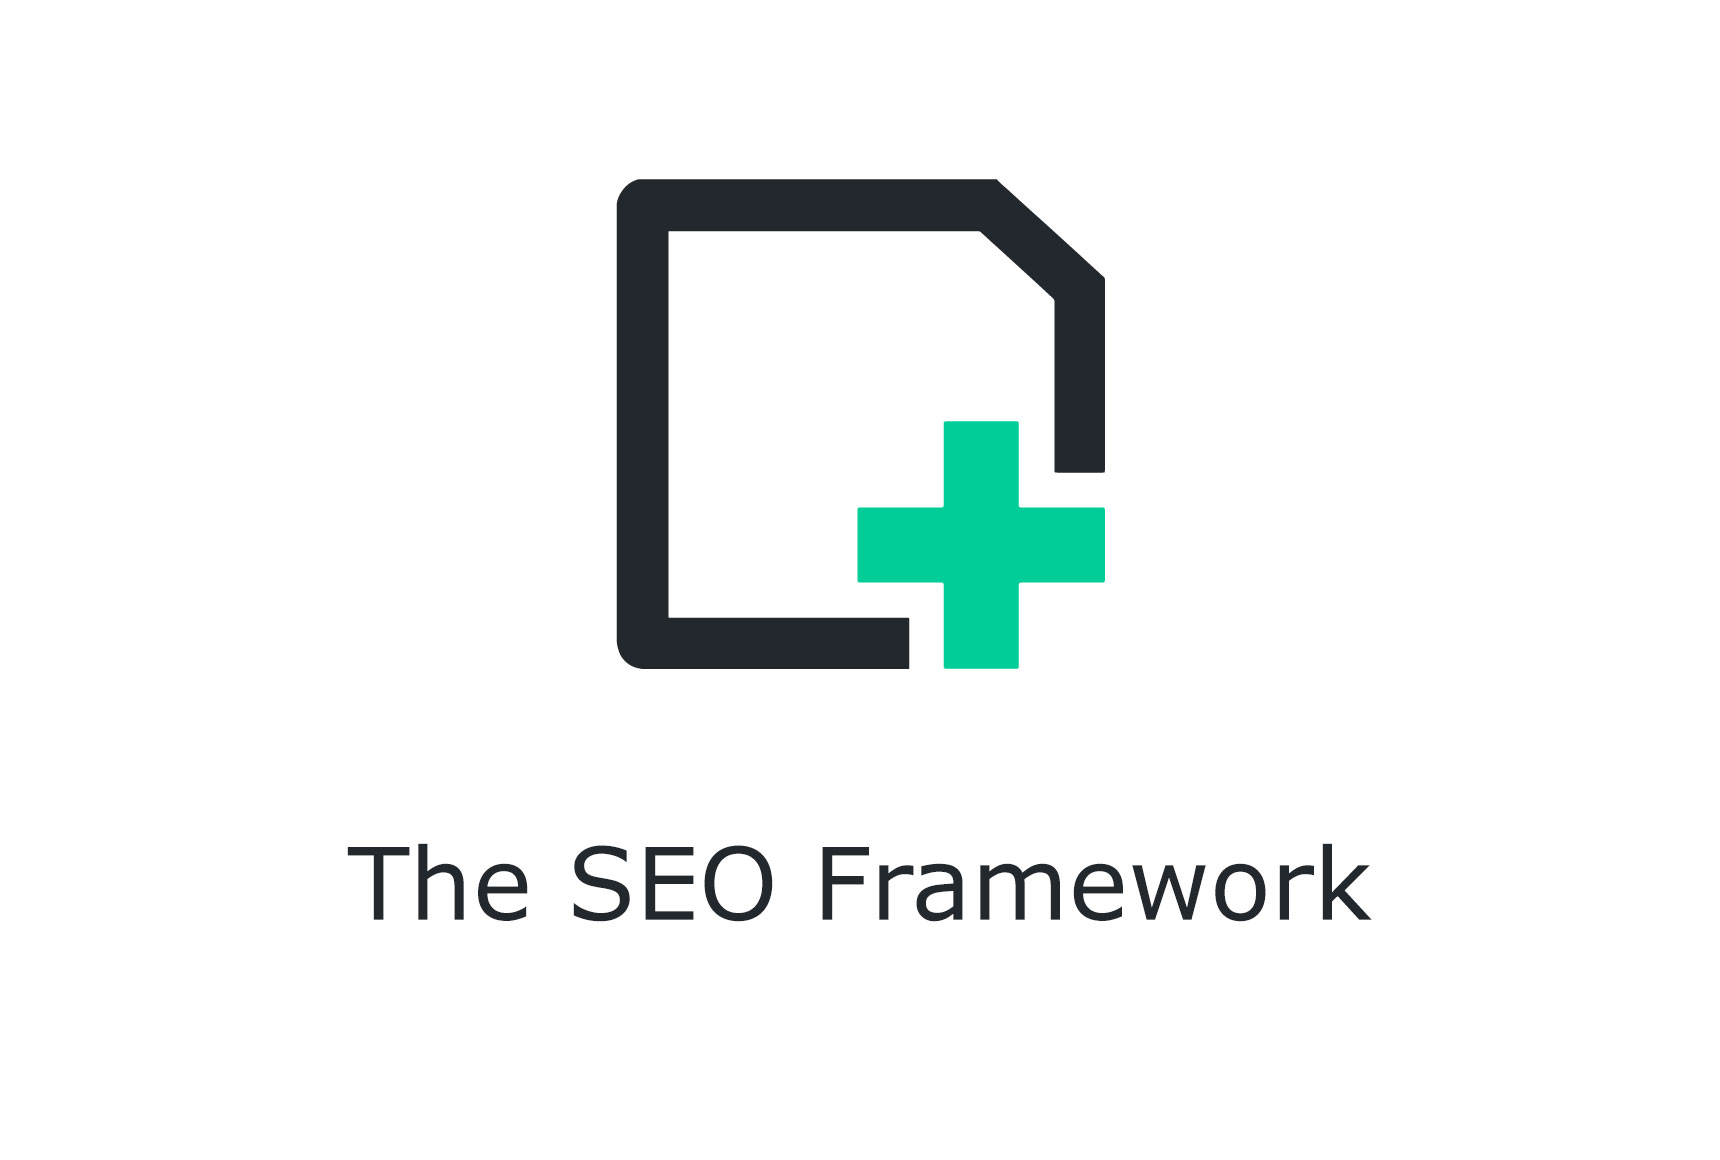 The SEO Framework masthead image